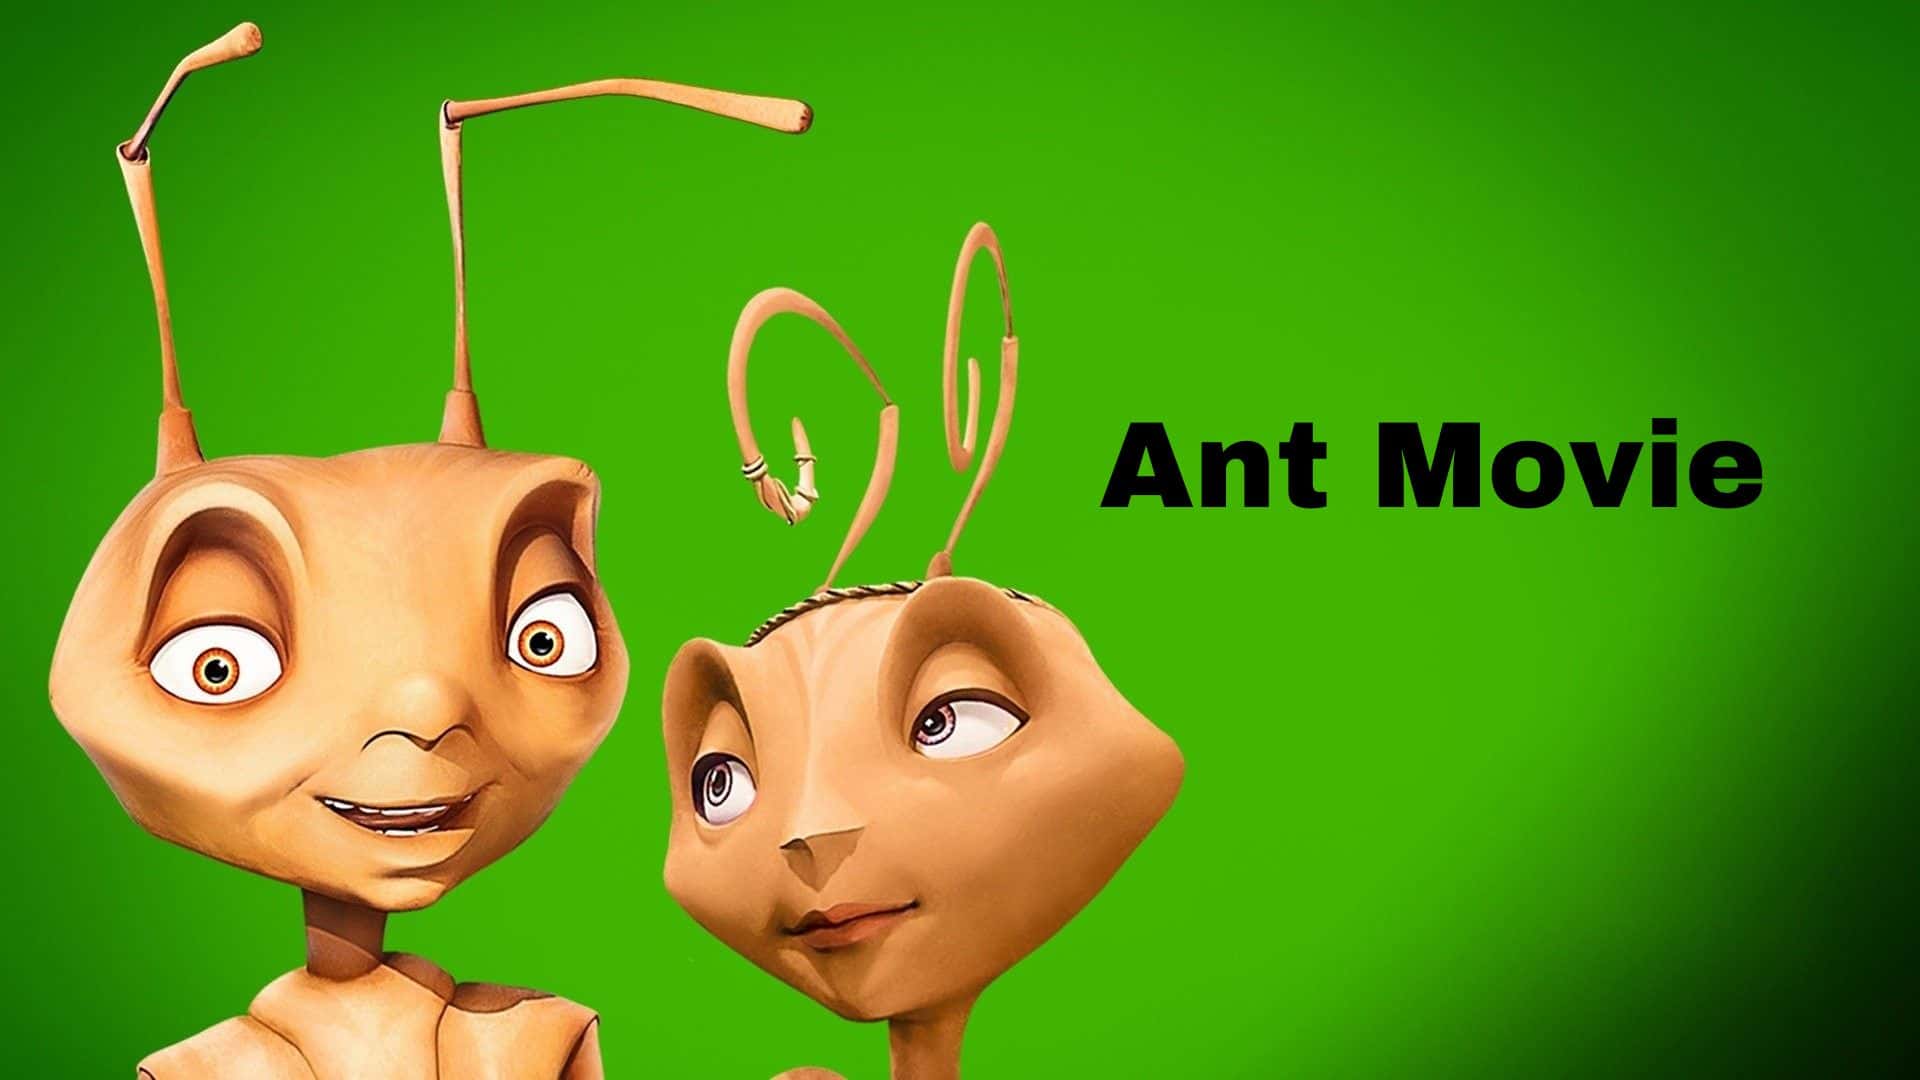 Ant Movie